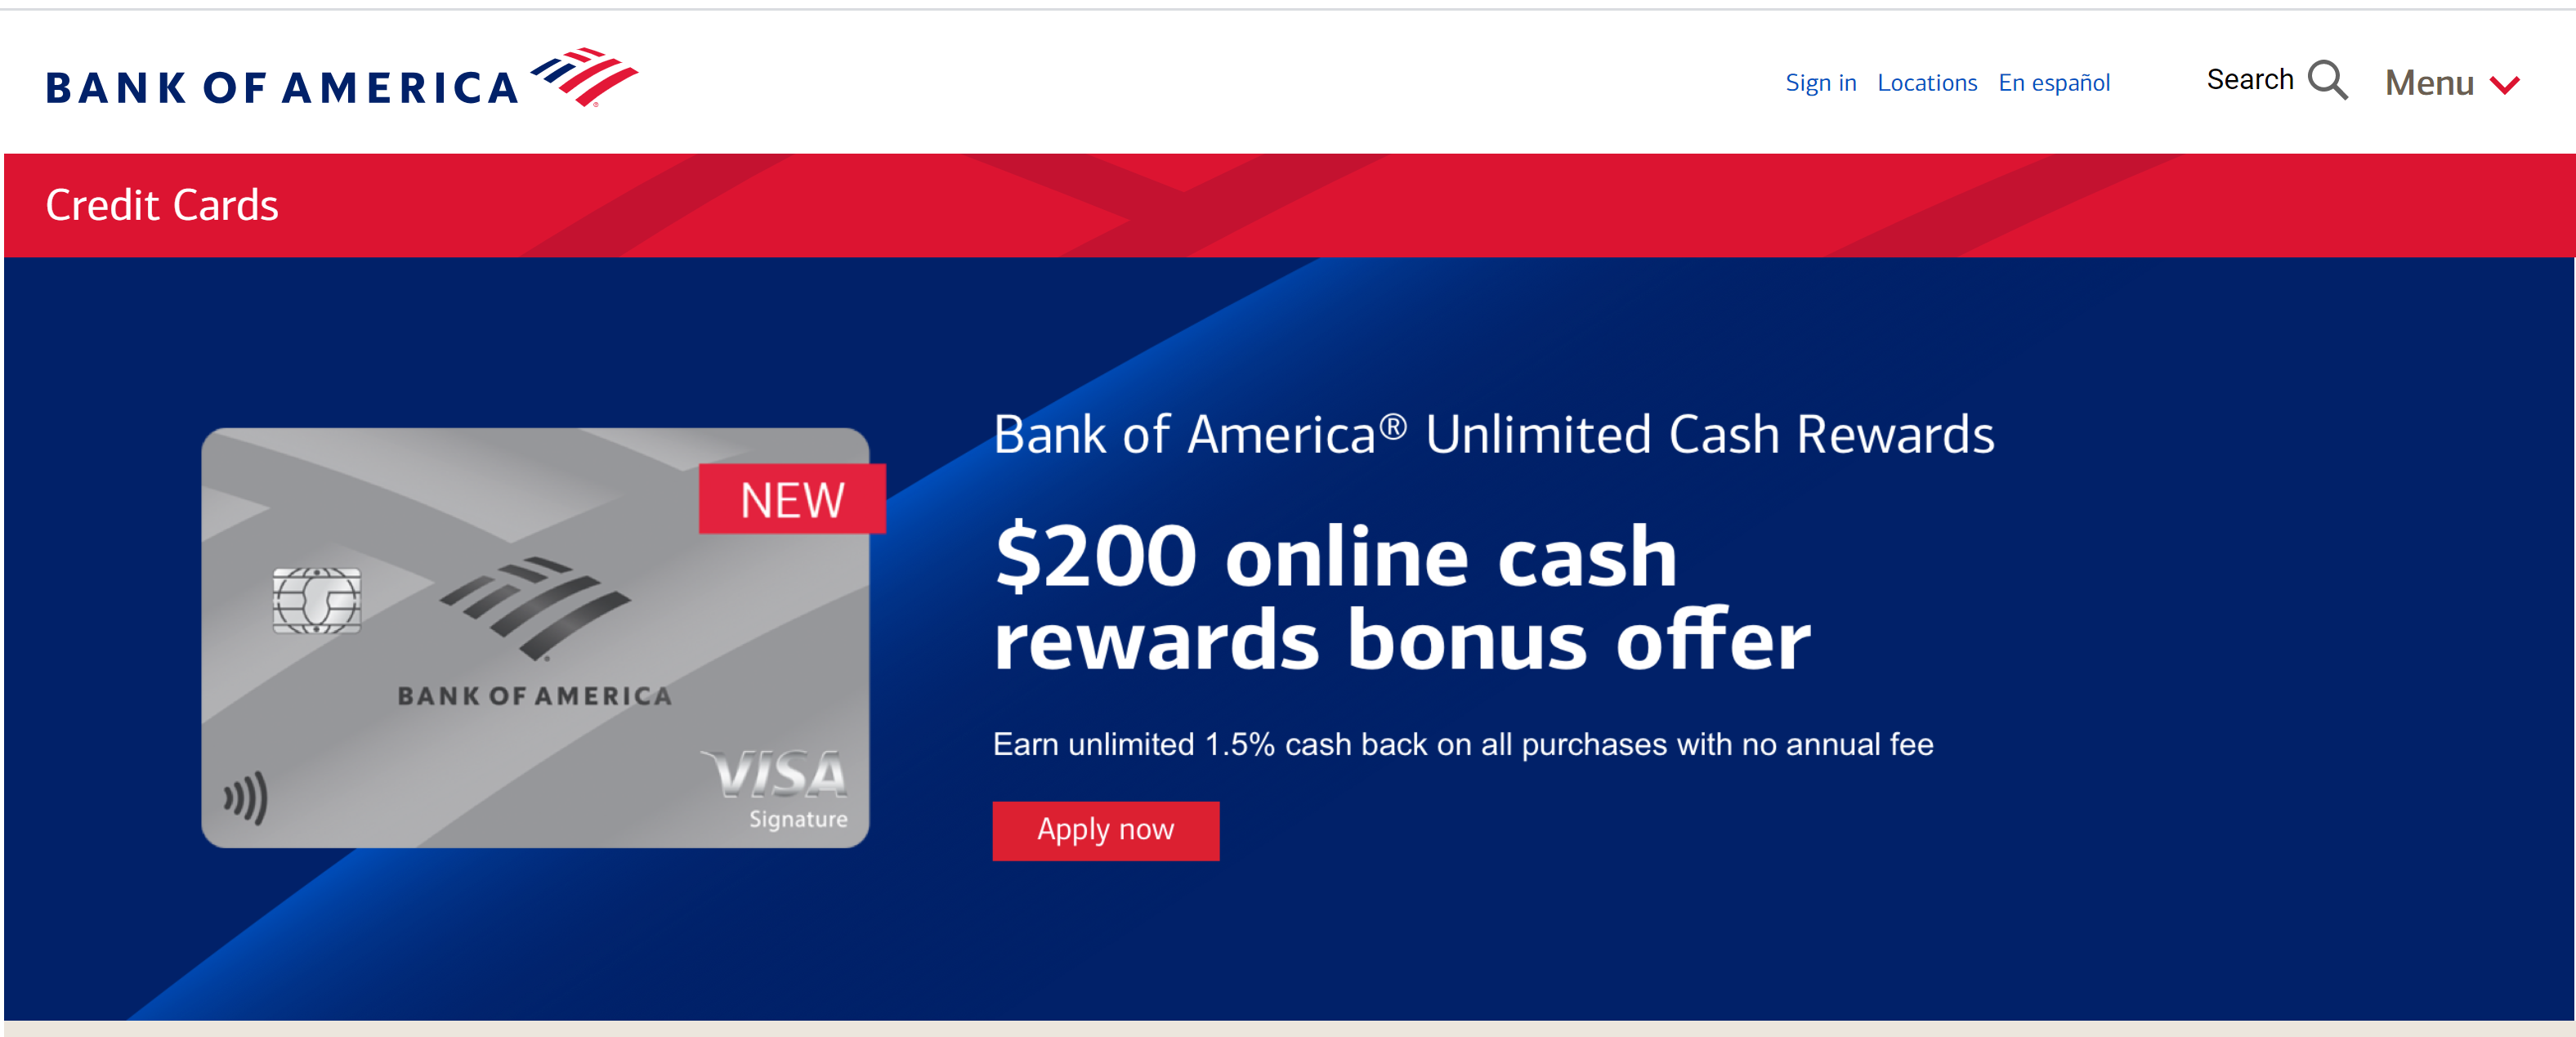 www.bankofamerica.com/mynewcard - BankAmericard Offer